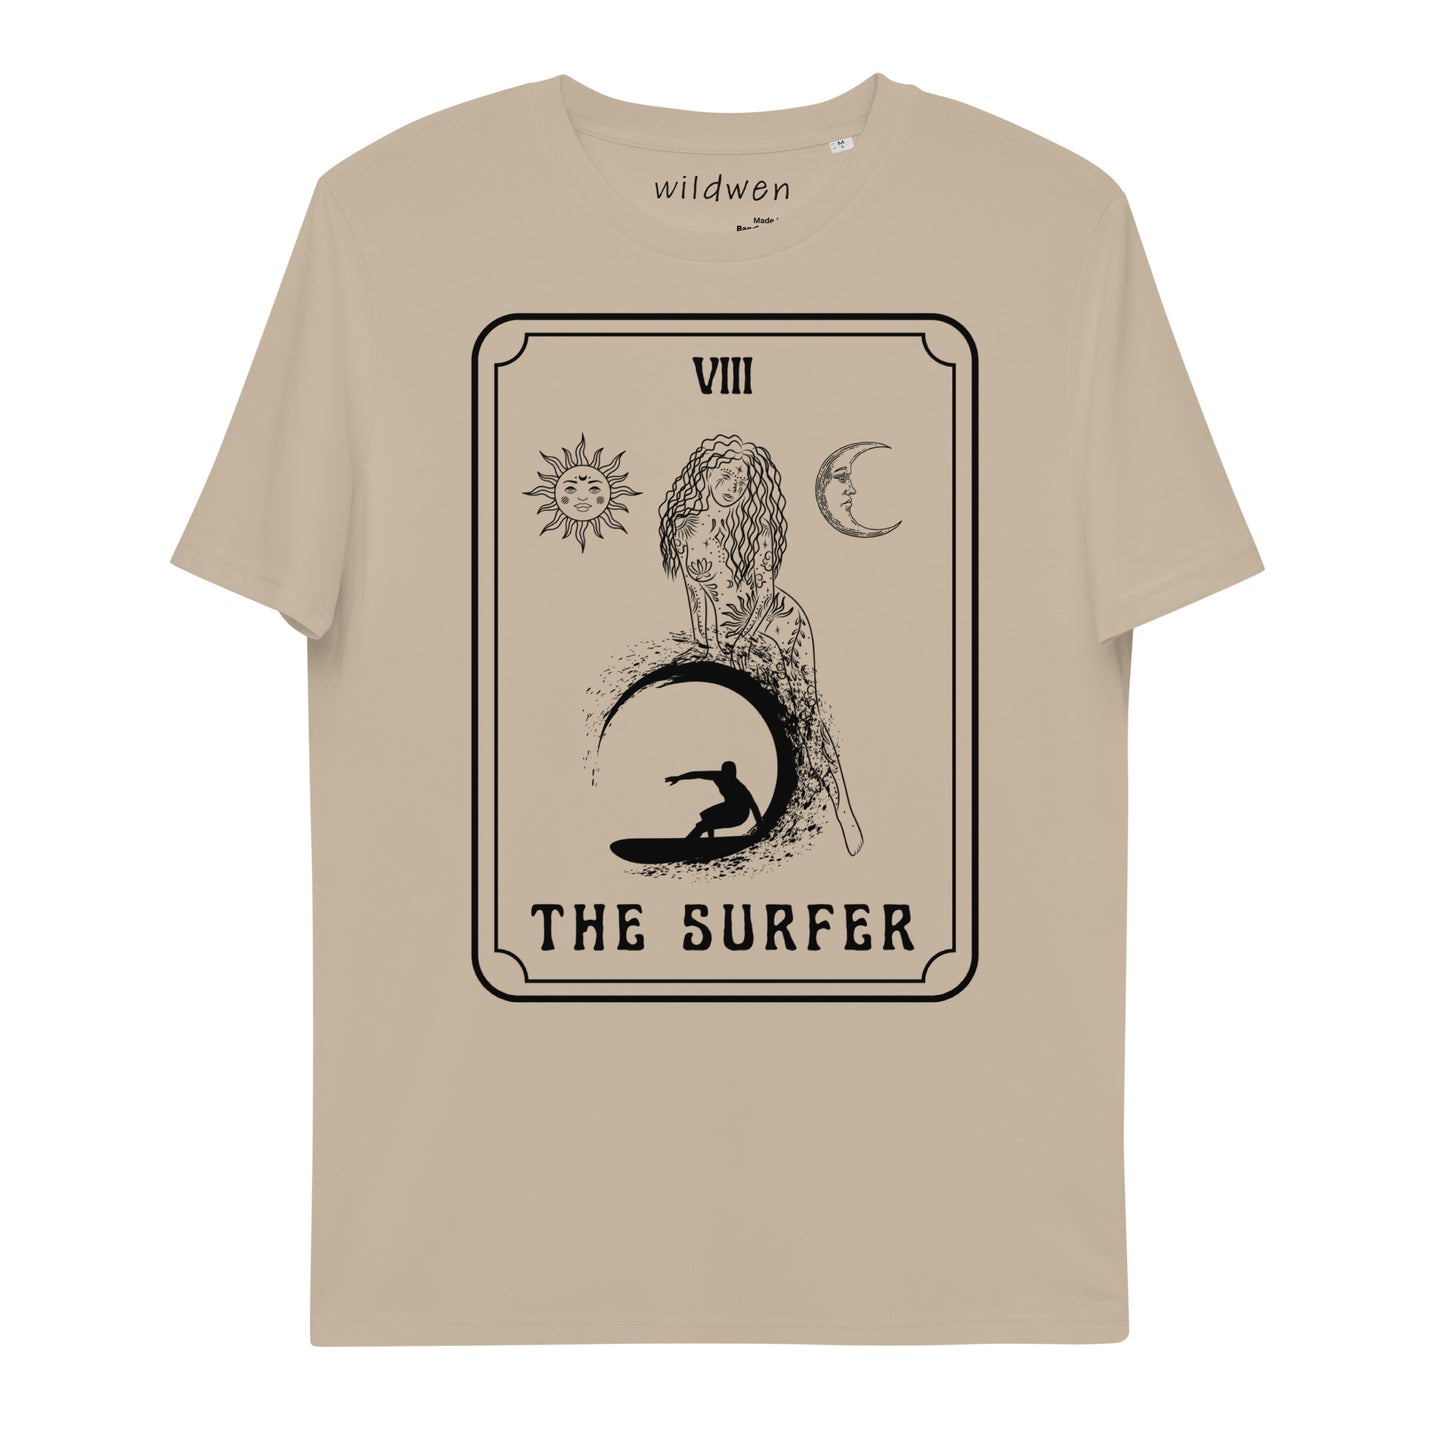 Tarot: The Surfer